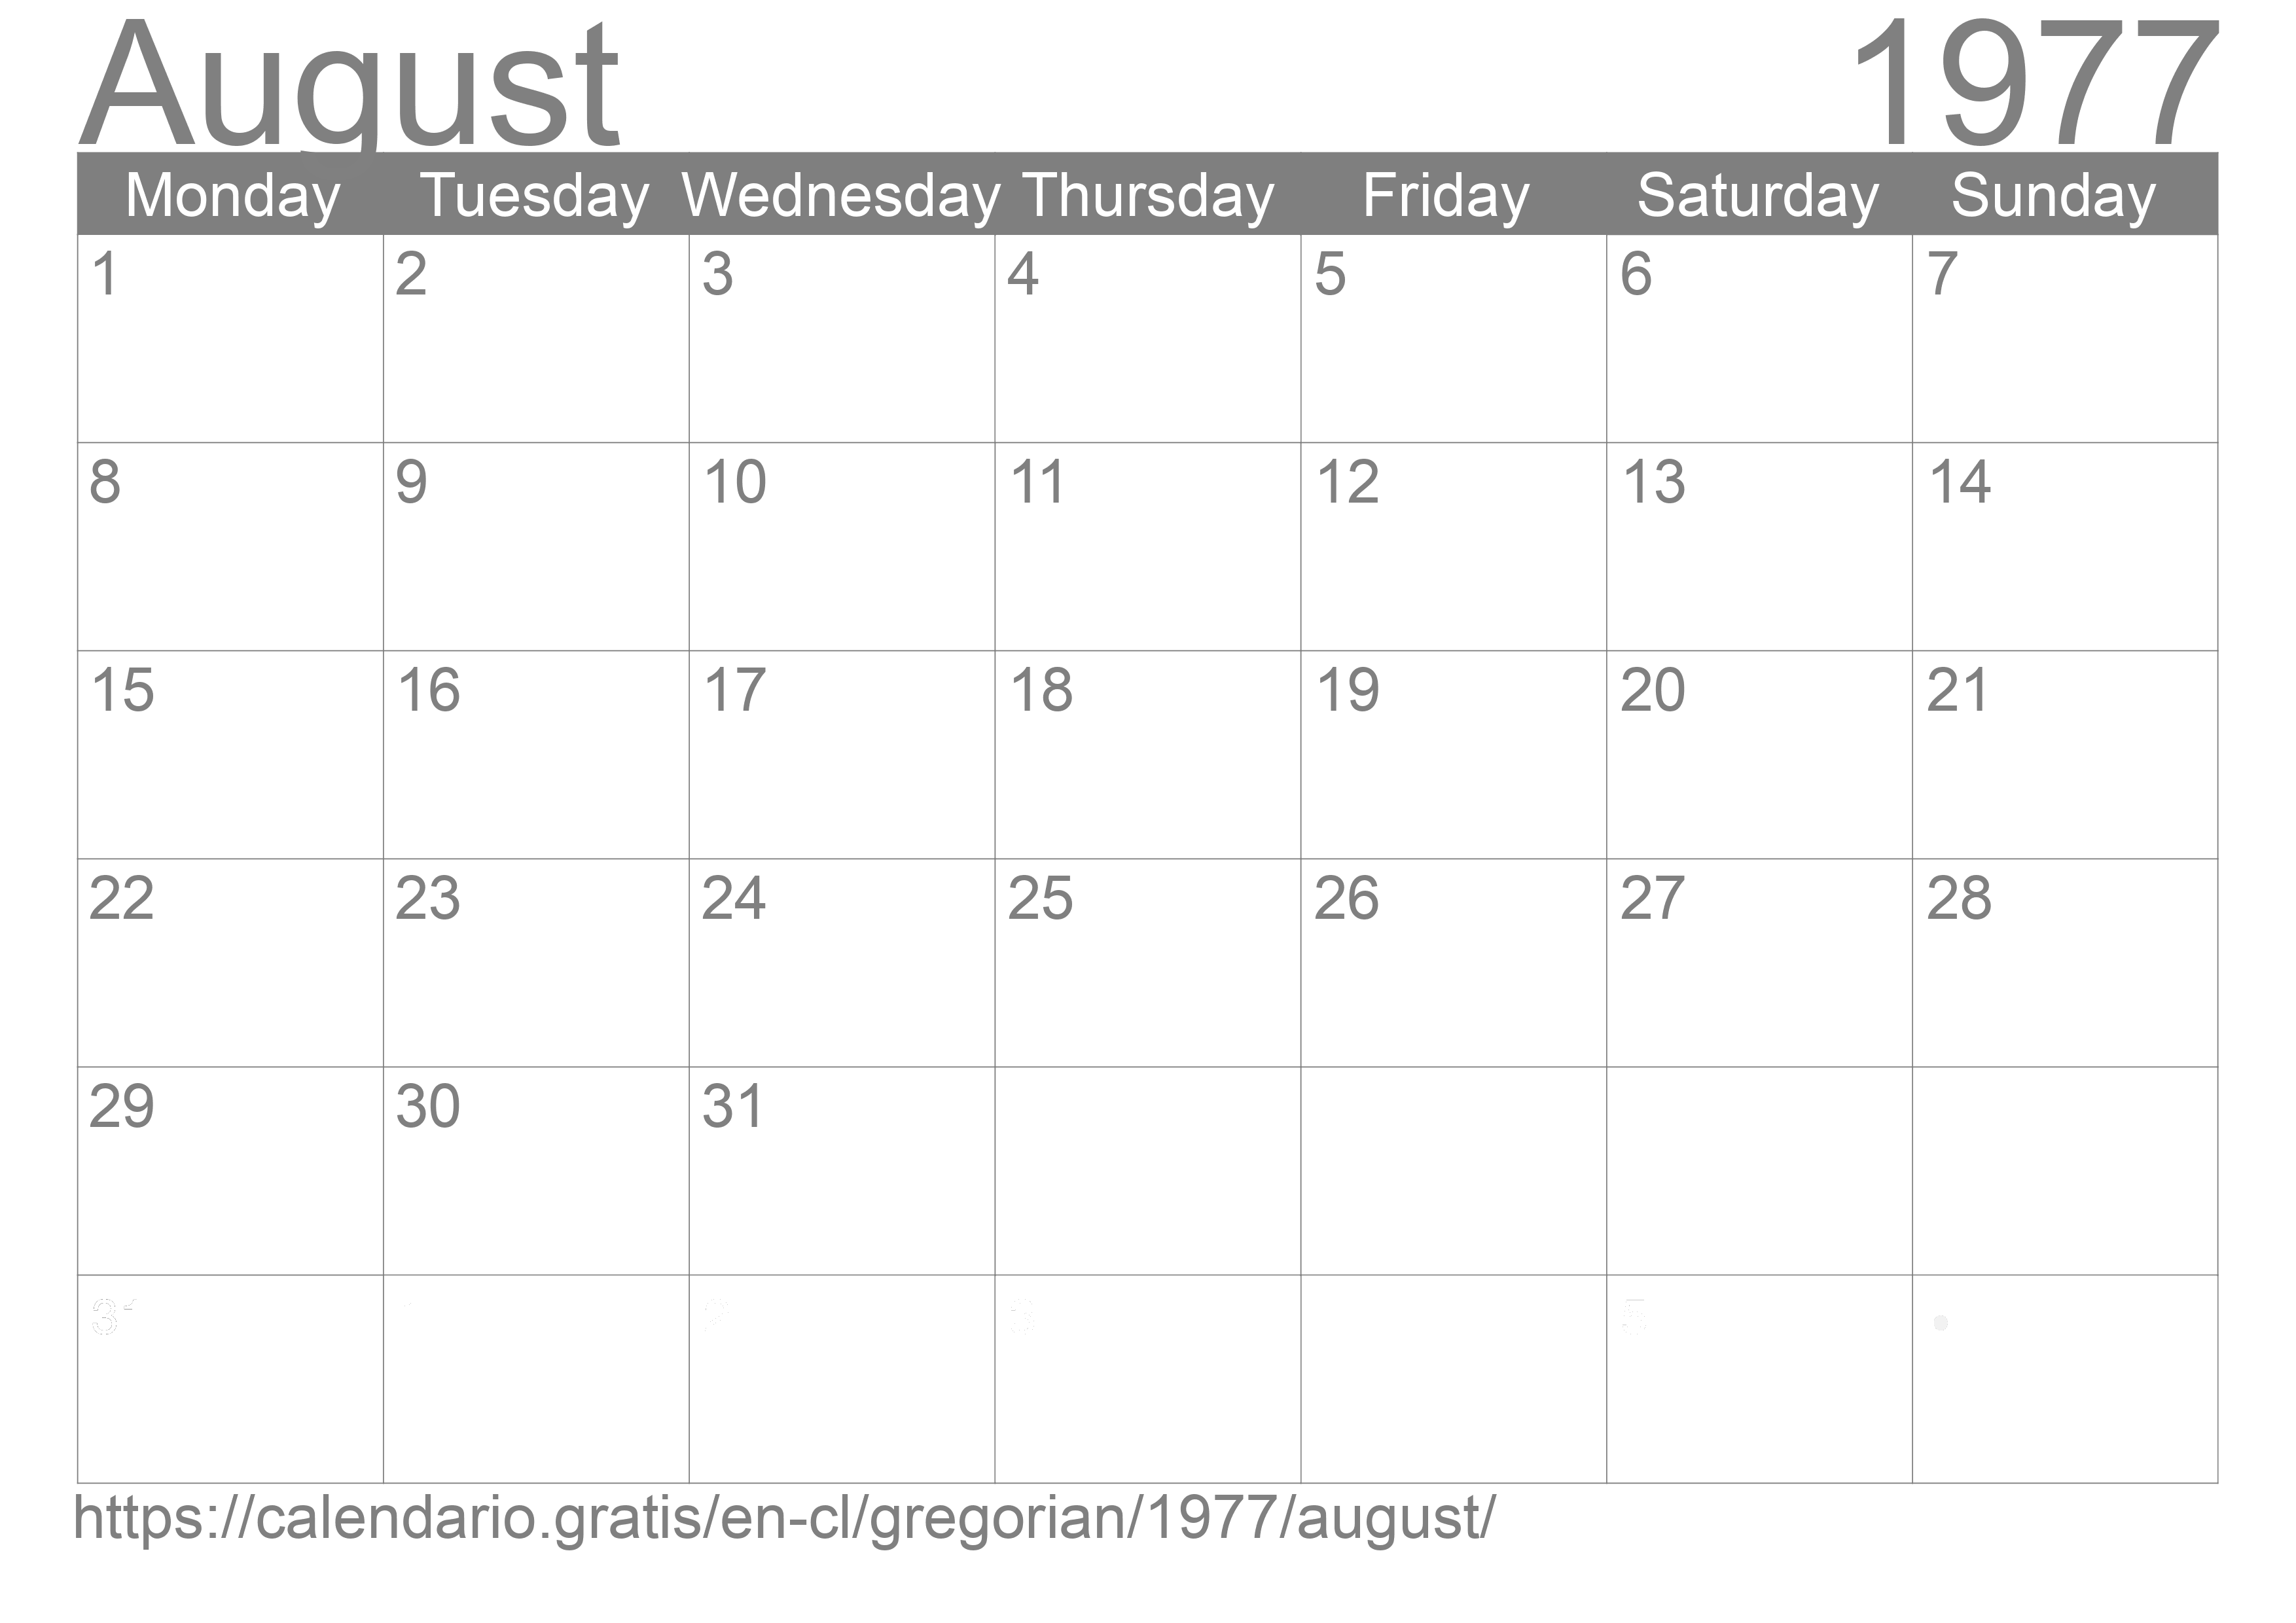 Calendar August 1977 to print